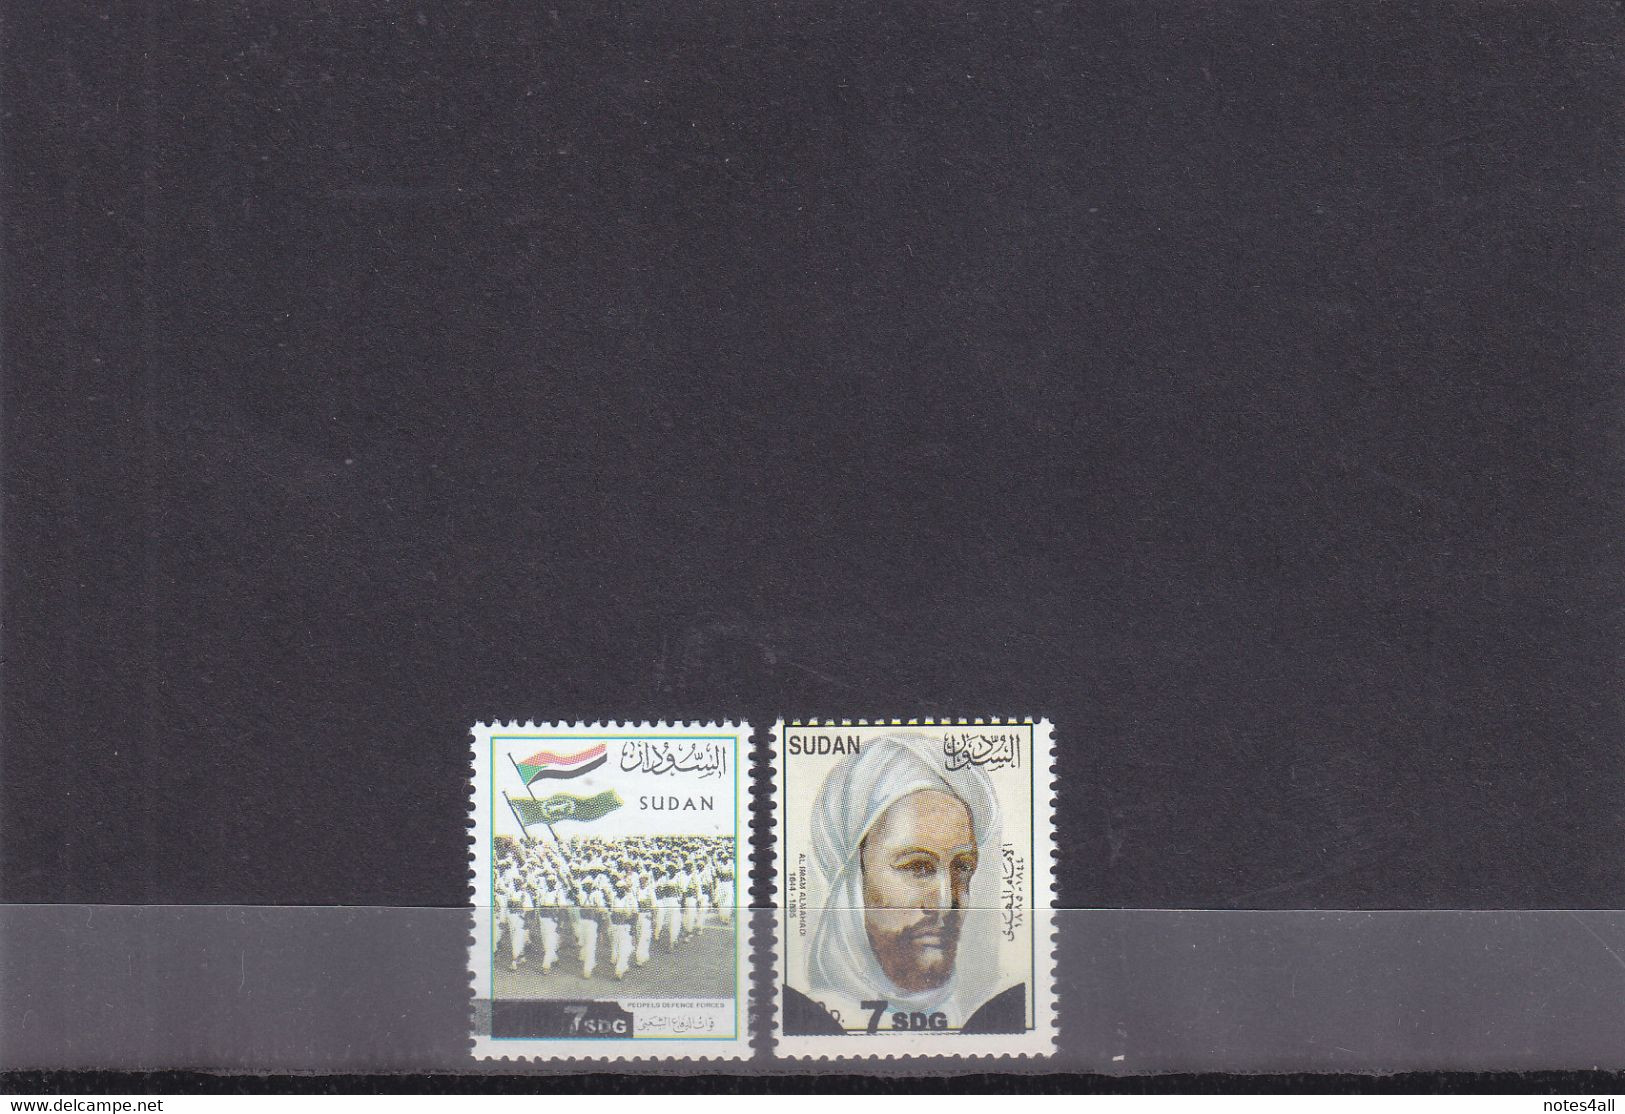 Stamps SUDAN 2012 SC-638 639 DEFINITIVE SERIE SET SURCHARGED MNH #15 - Soudan (1954-...)